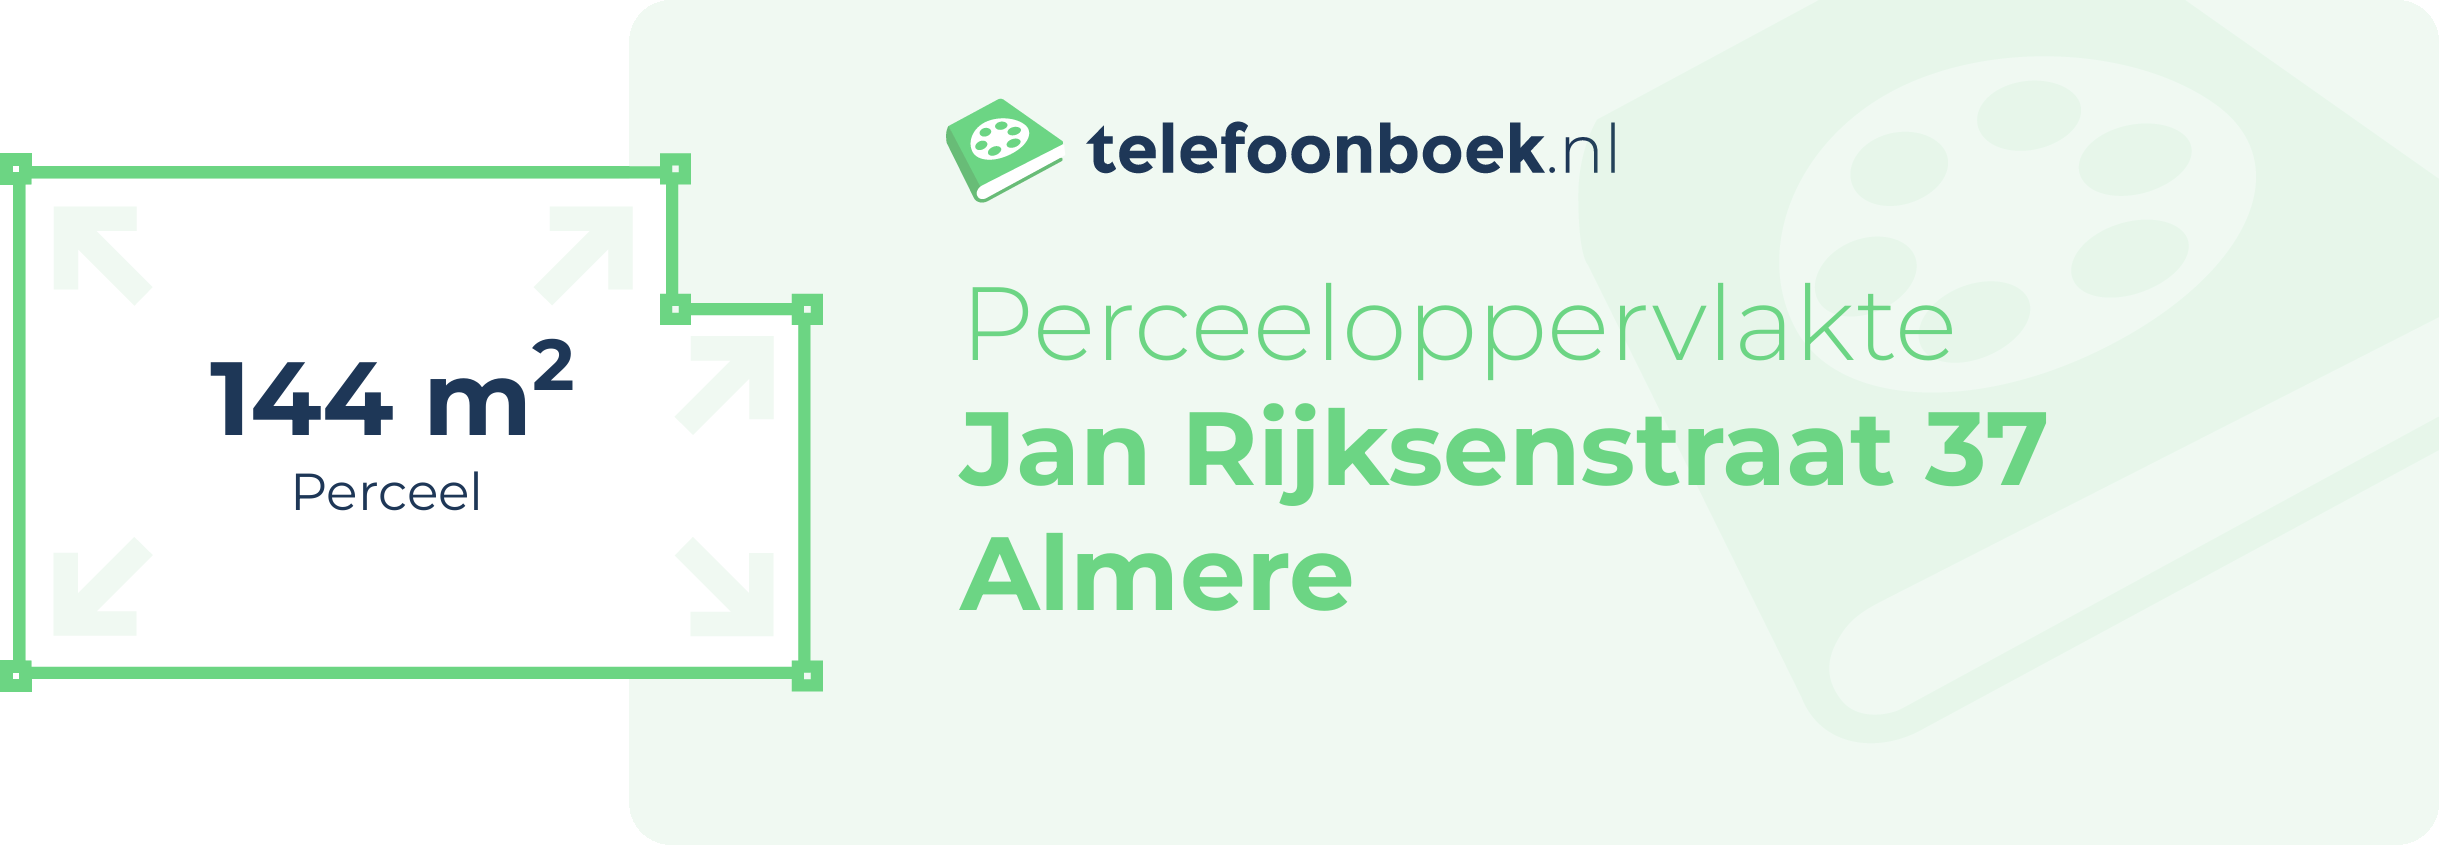 Perceeloppervlakte Jan Rijksenstraat 37 Almere